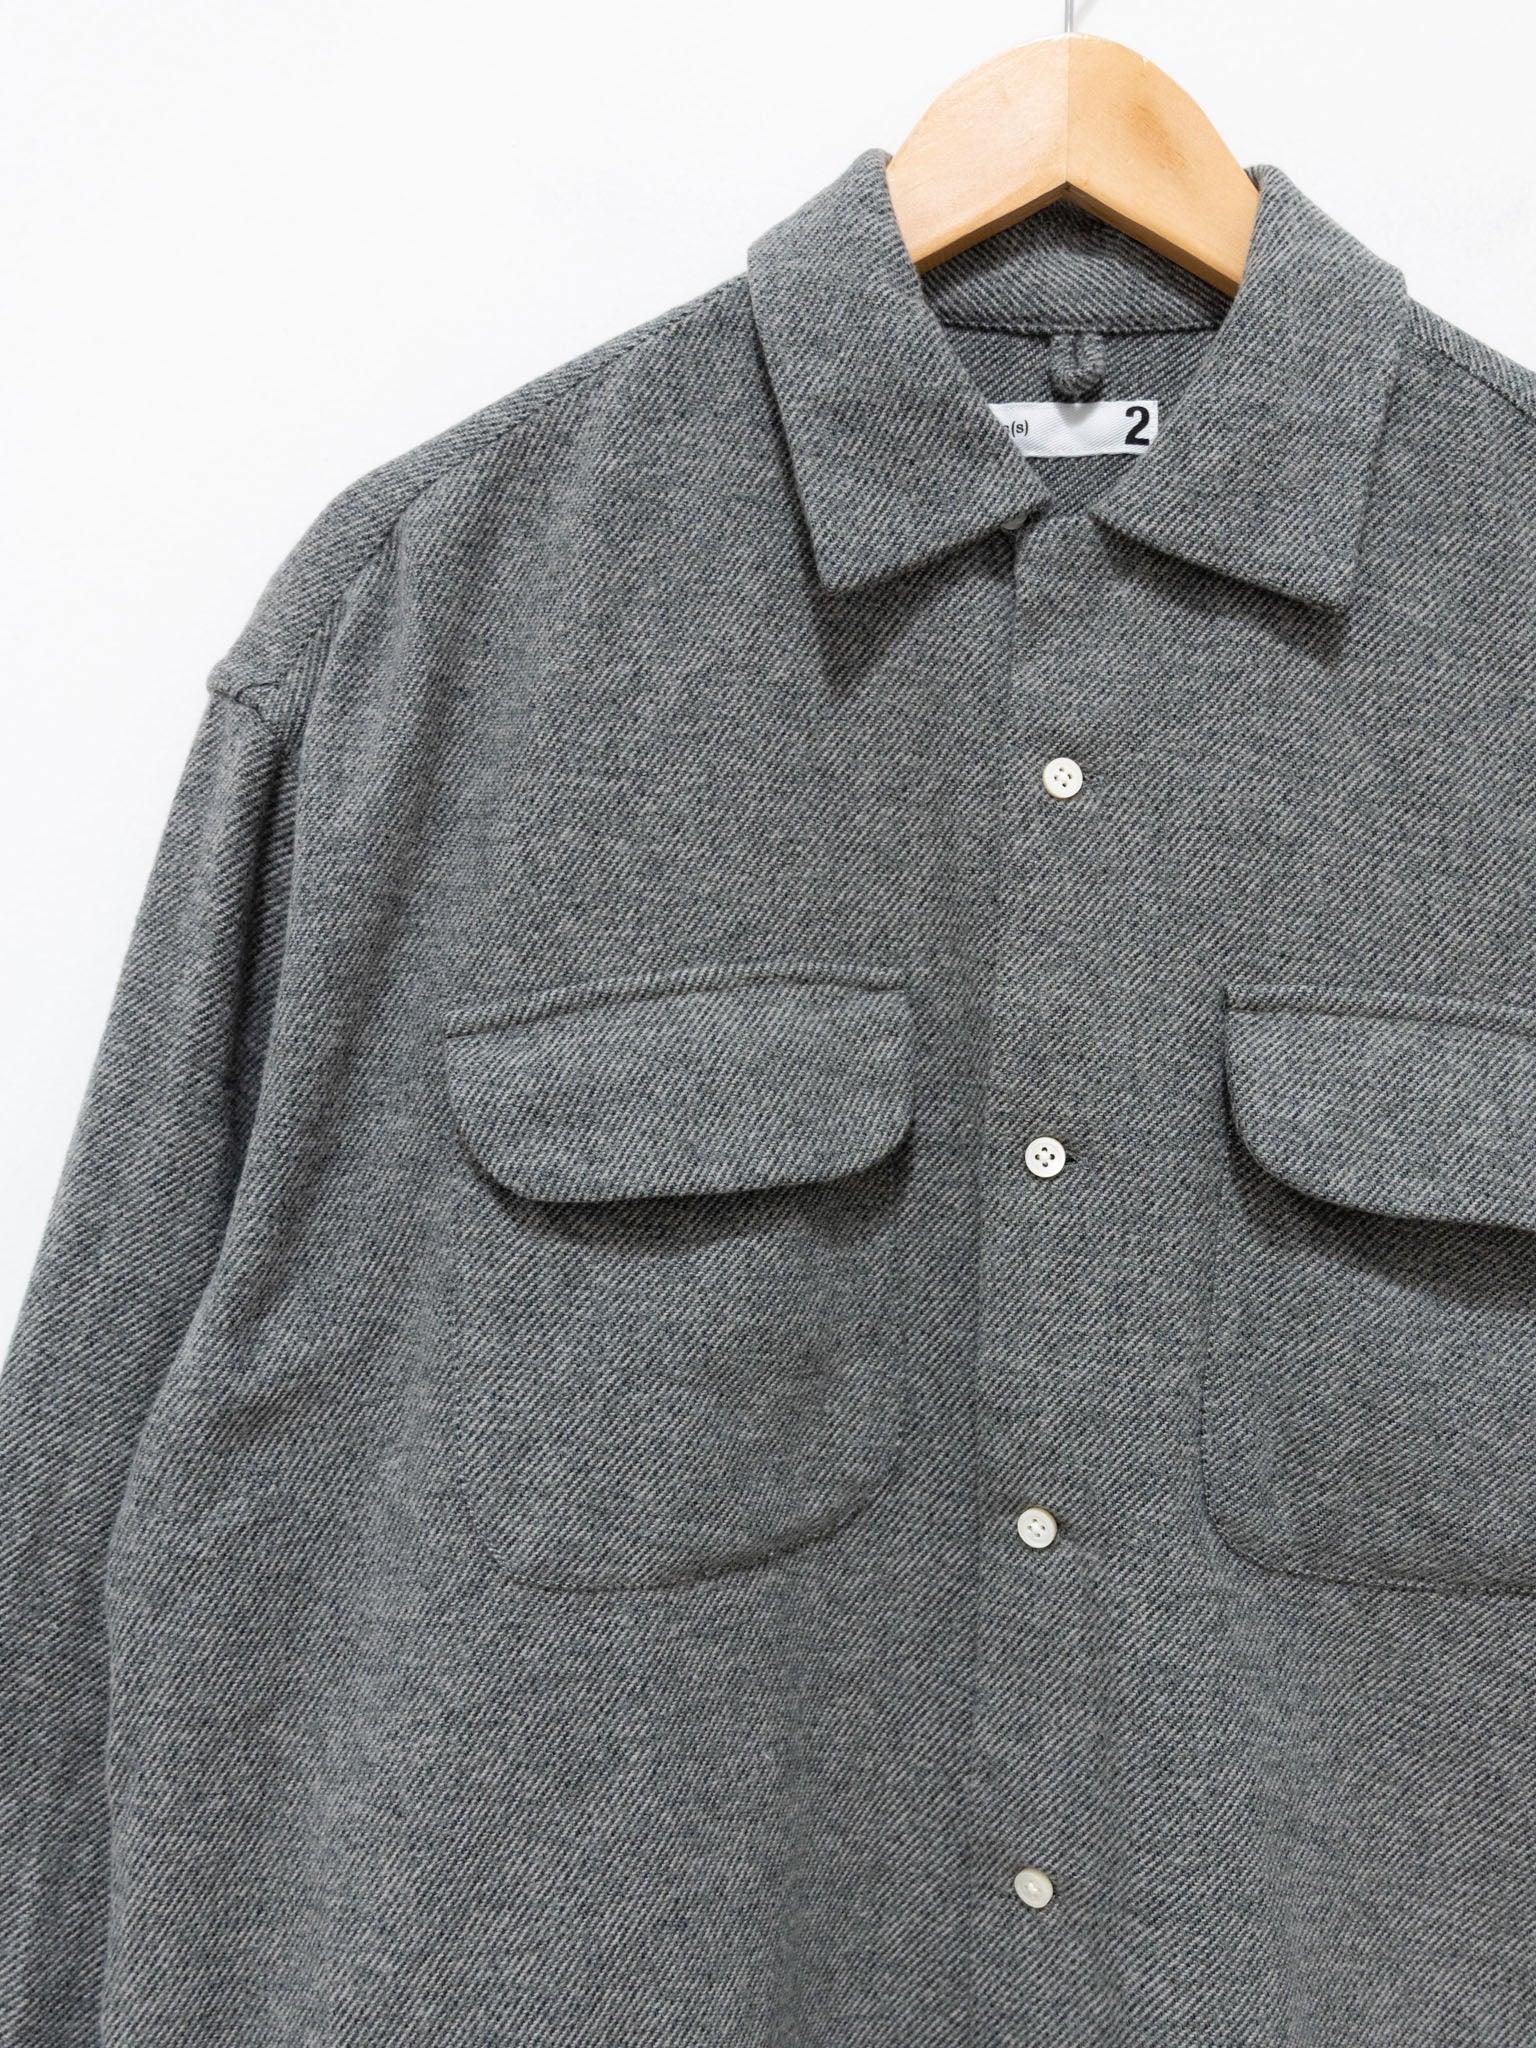 Namu Shop - ts(s) Mixed Color Cotton Round Flap Pocket Baggy Shirt - Gray